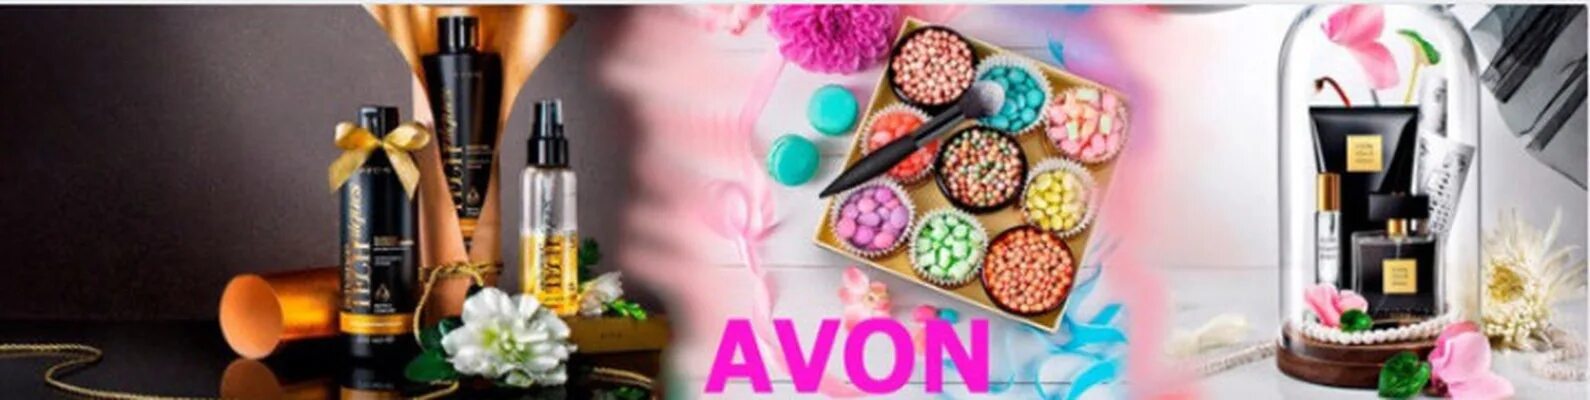 Avon продукция. Косметика Avon. Обложка для сообщества Avon. Реклама косметики эйвон. Avon bearing